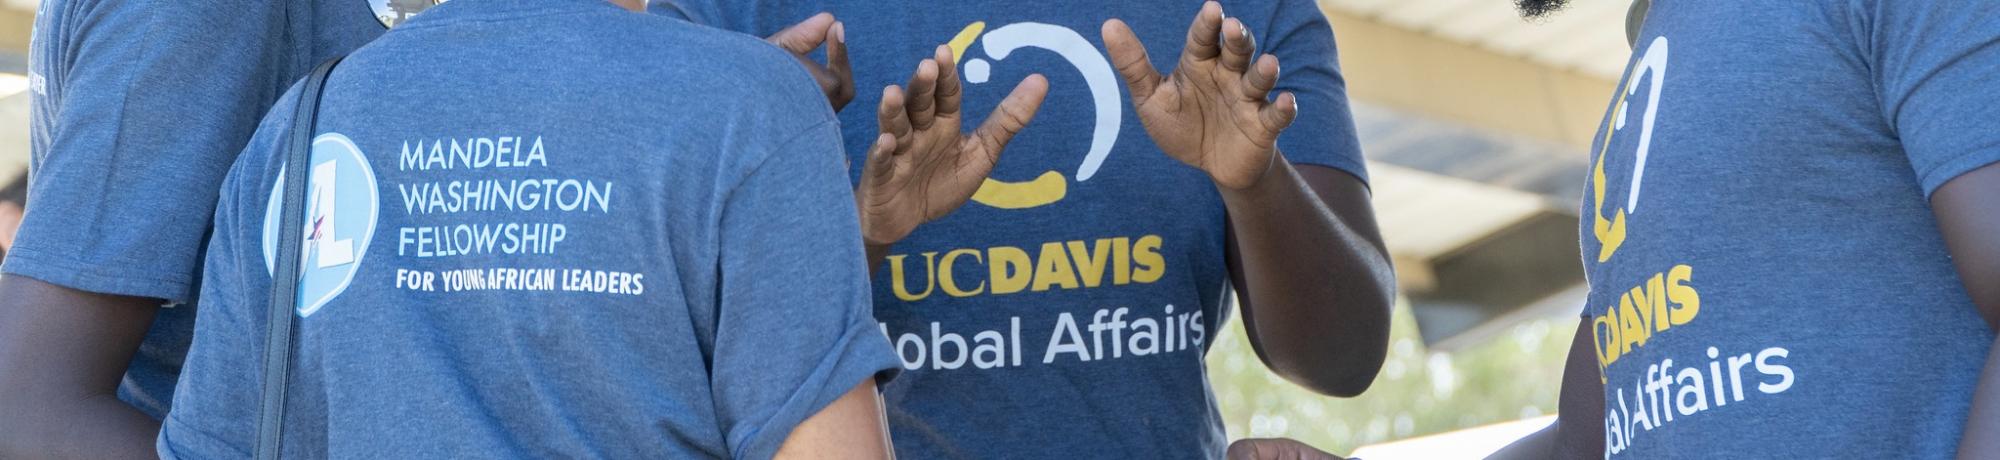 Mandela and Global Affairs t-shirts